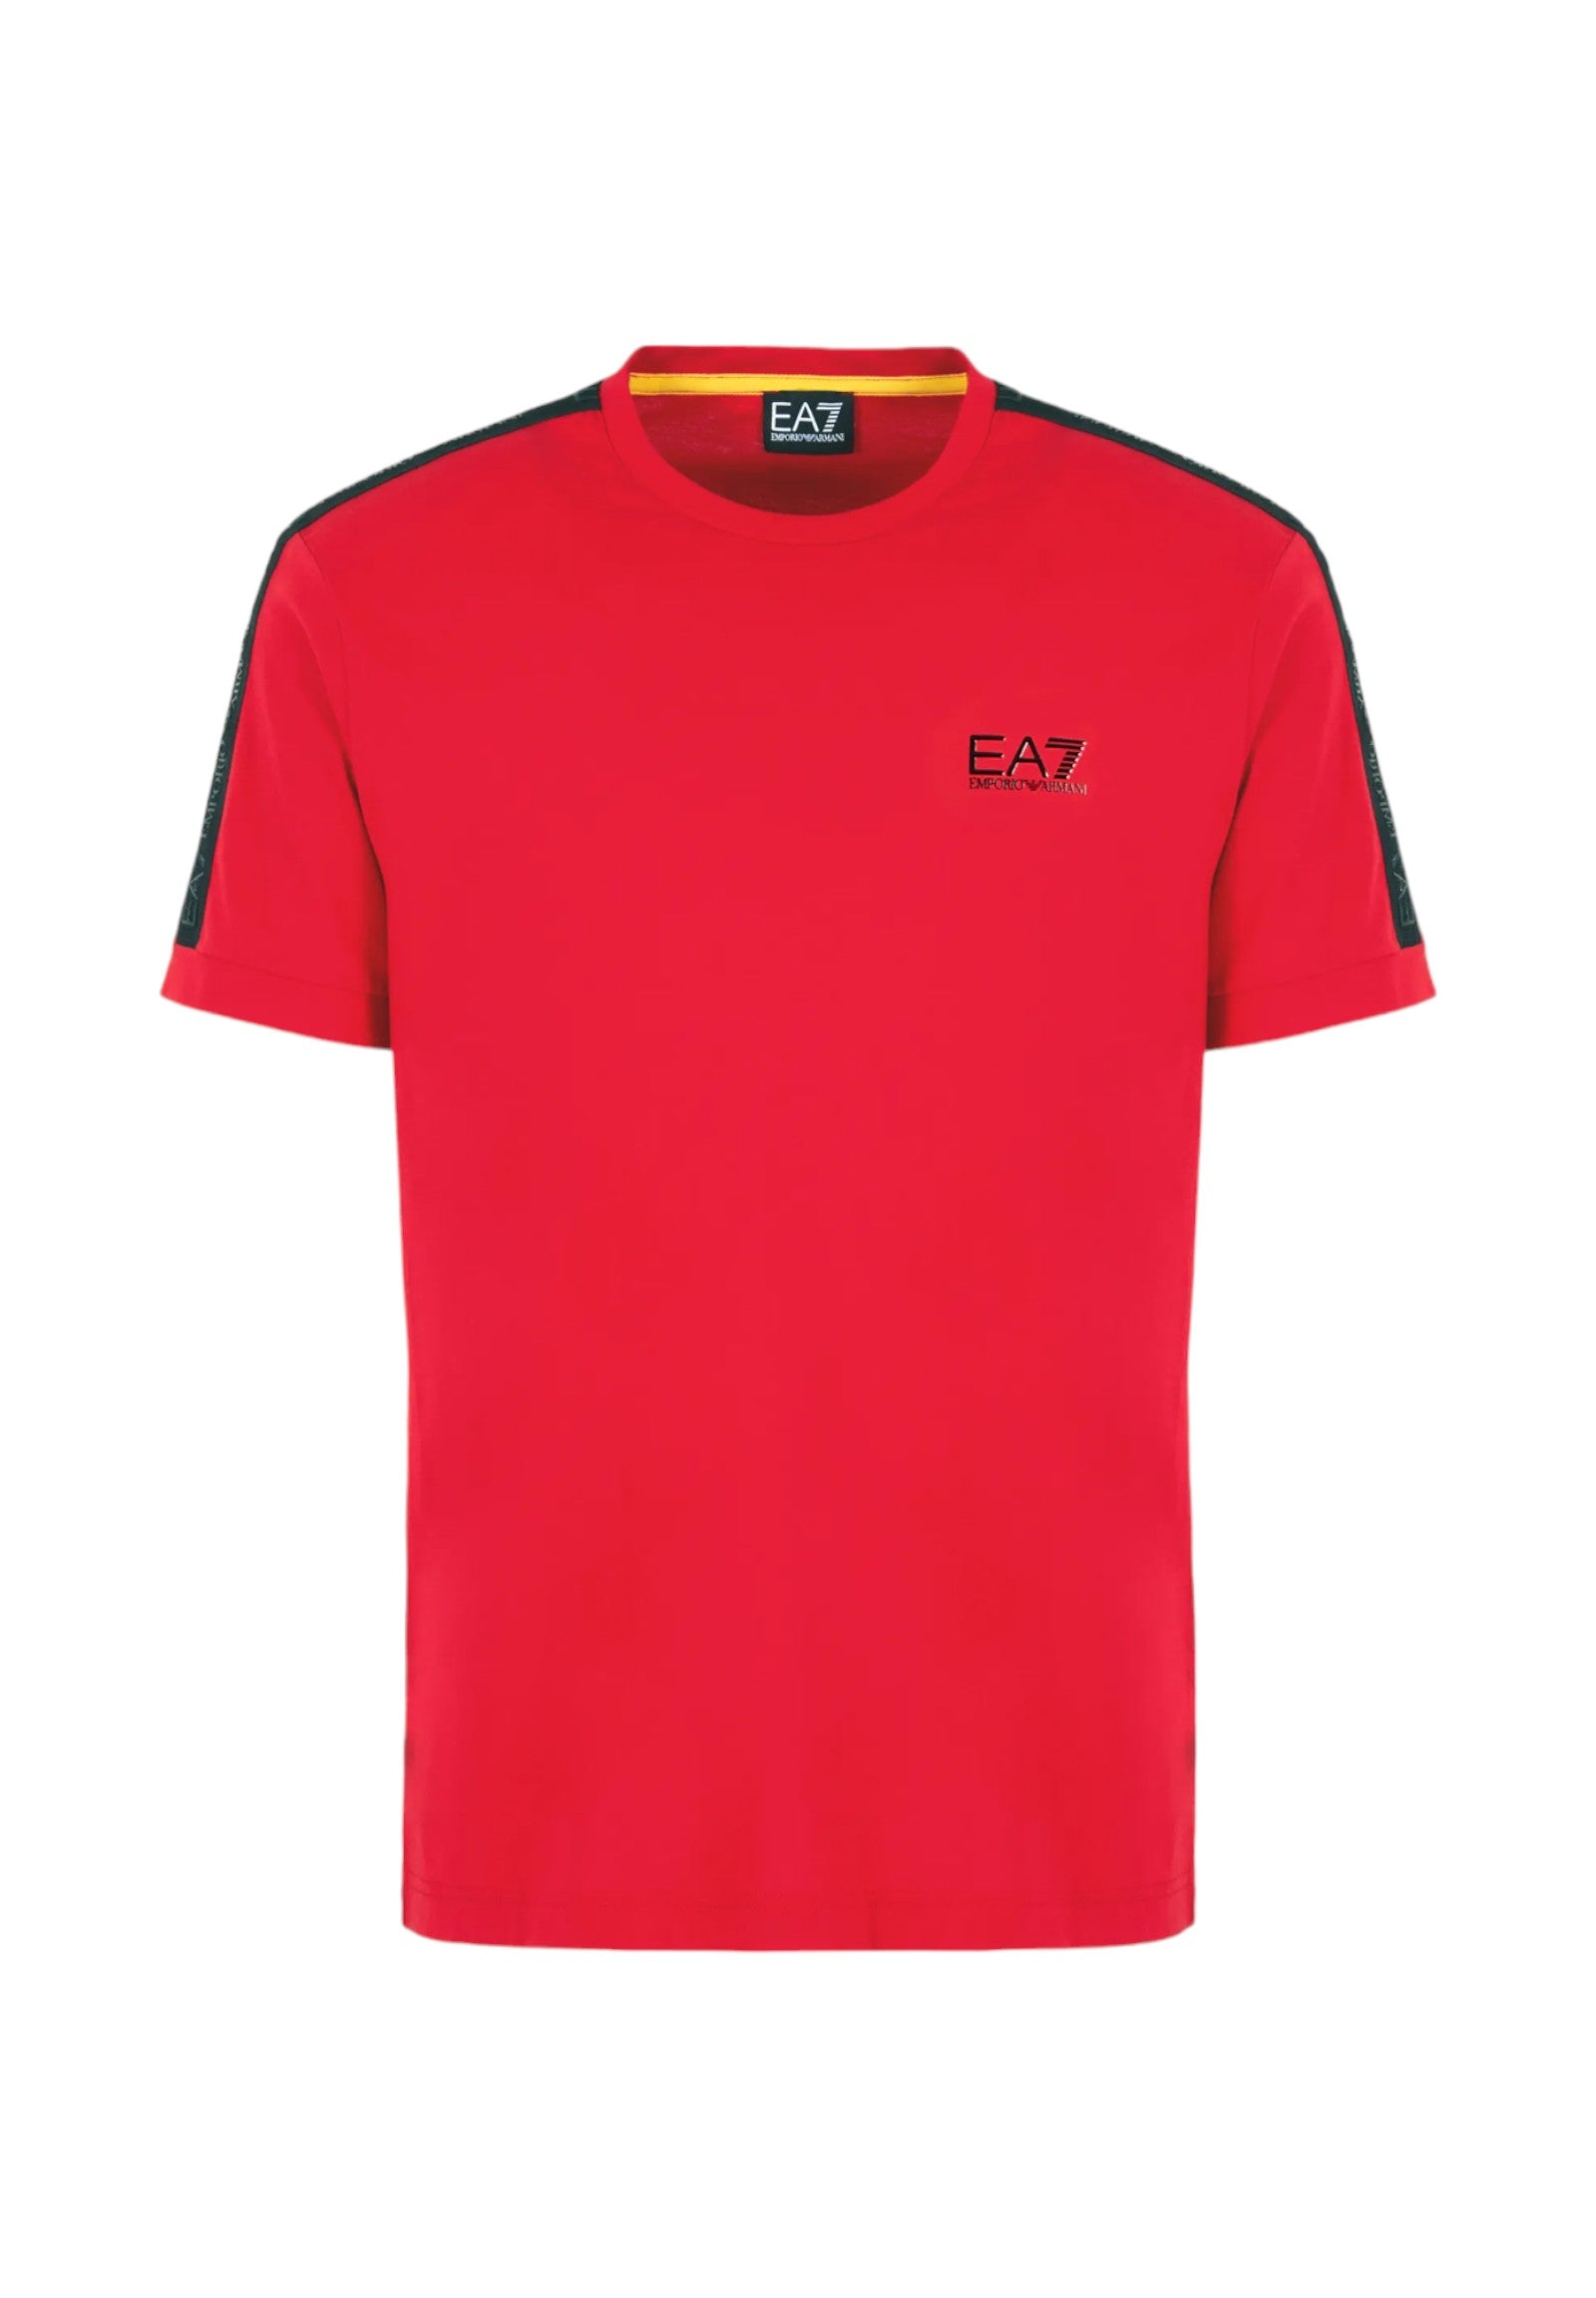 Ea7 Emporio Armani T-Shirt* 3dpt35 Salsa